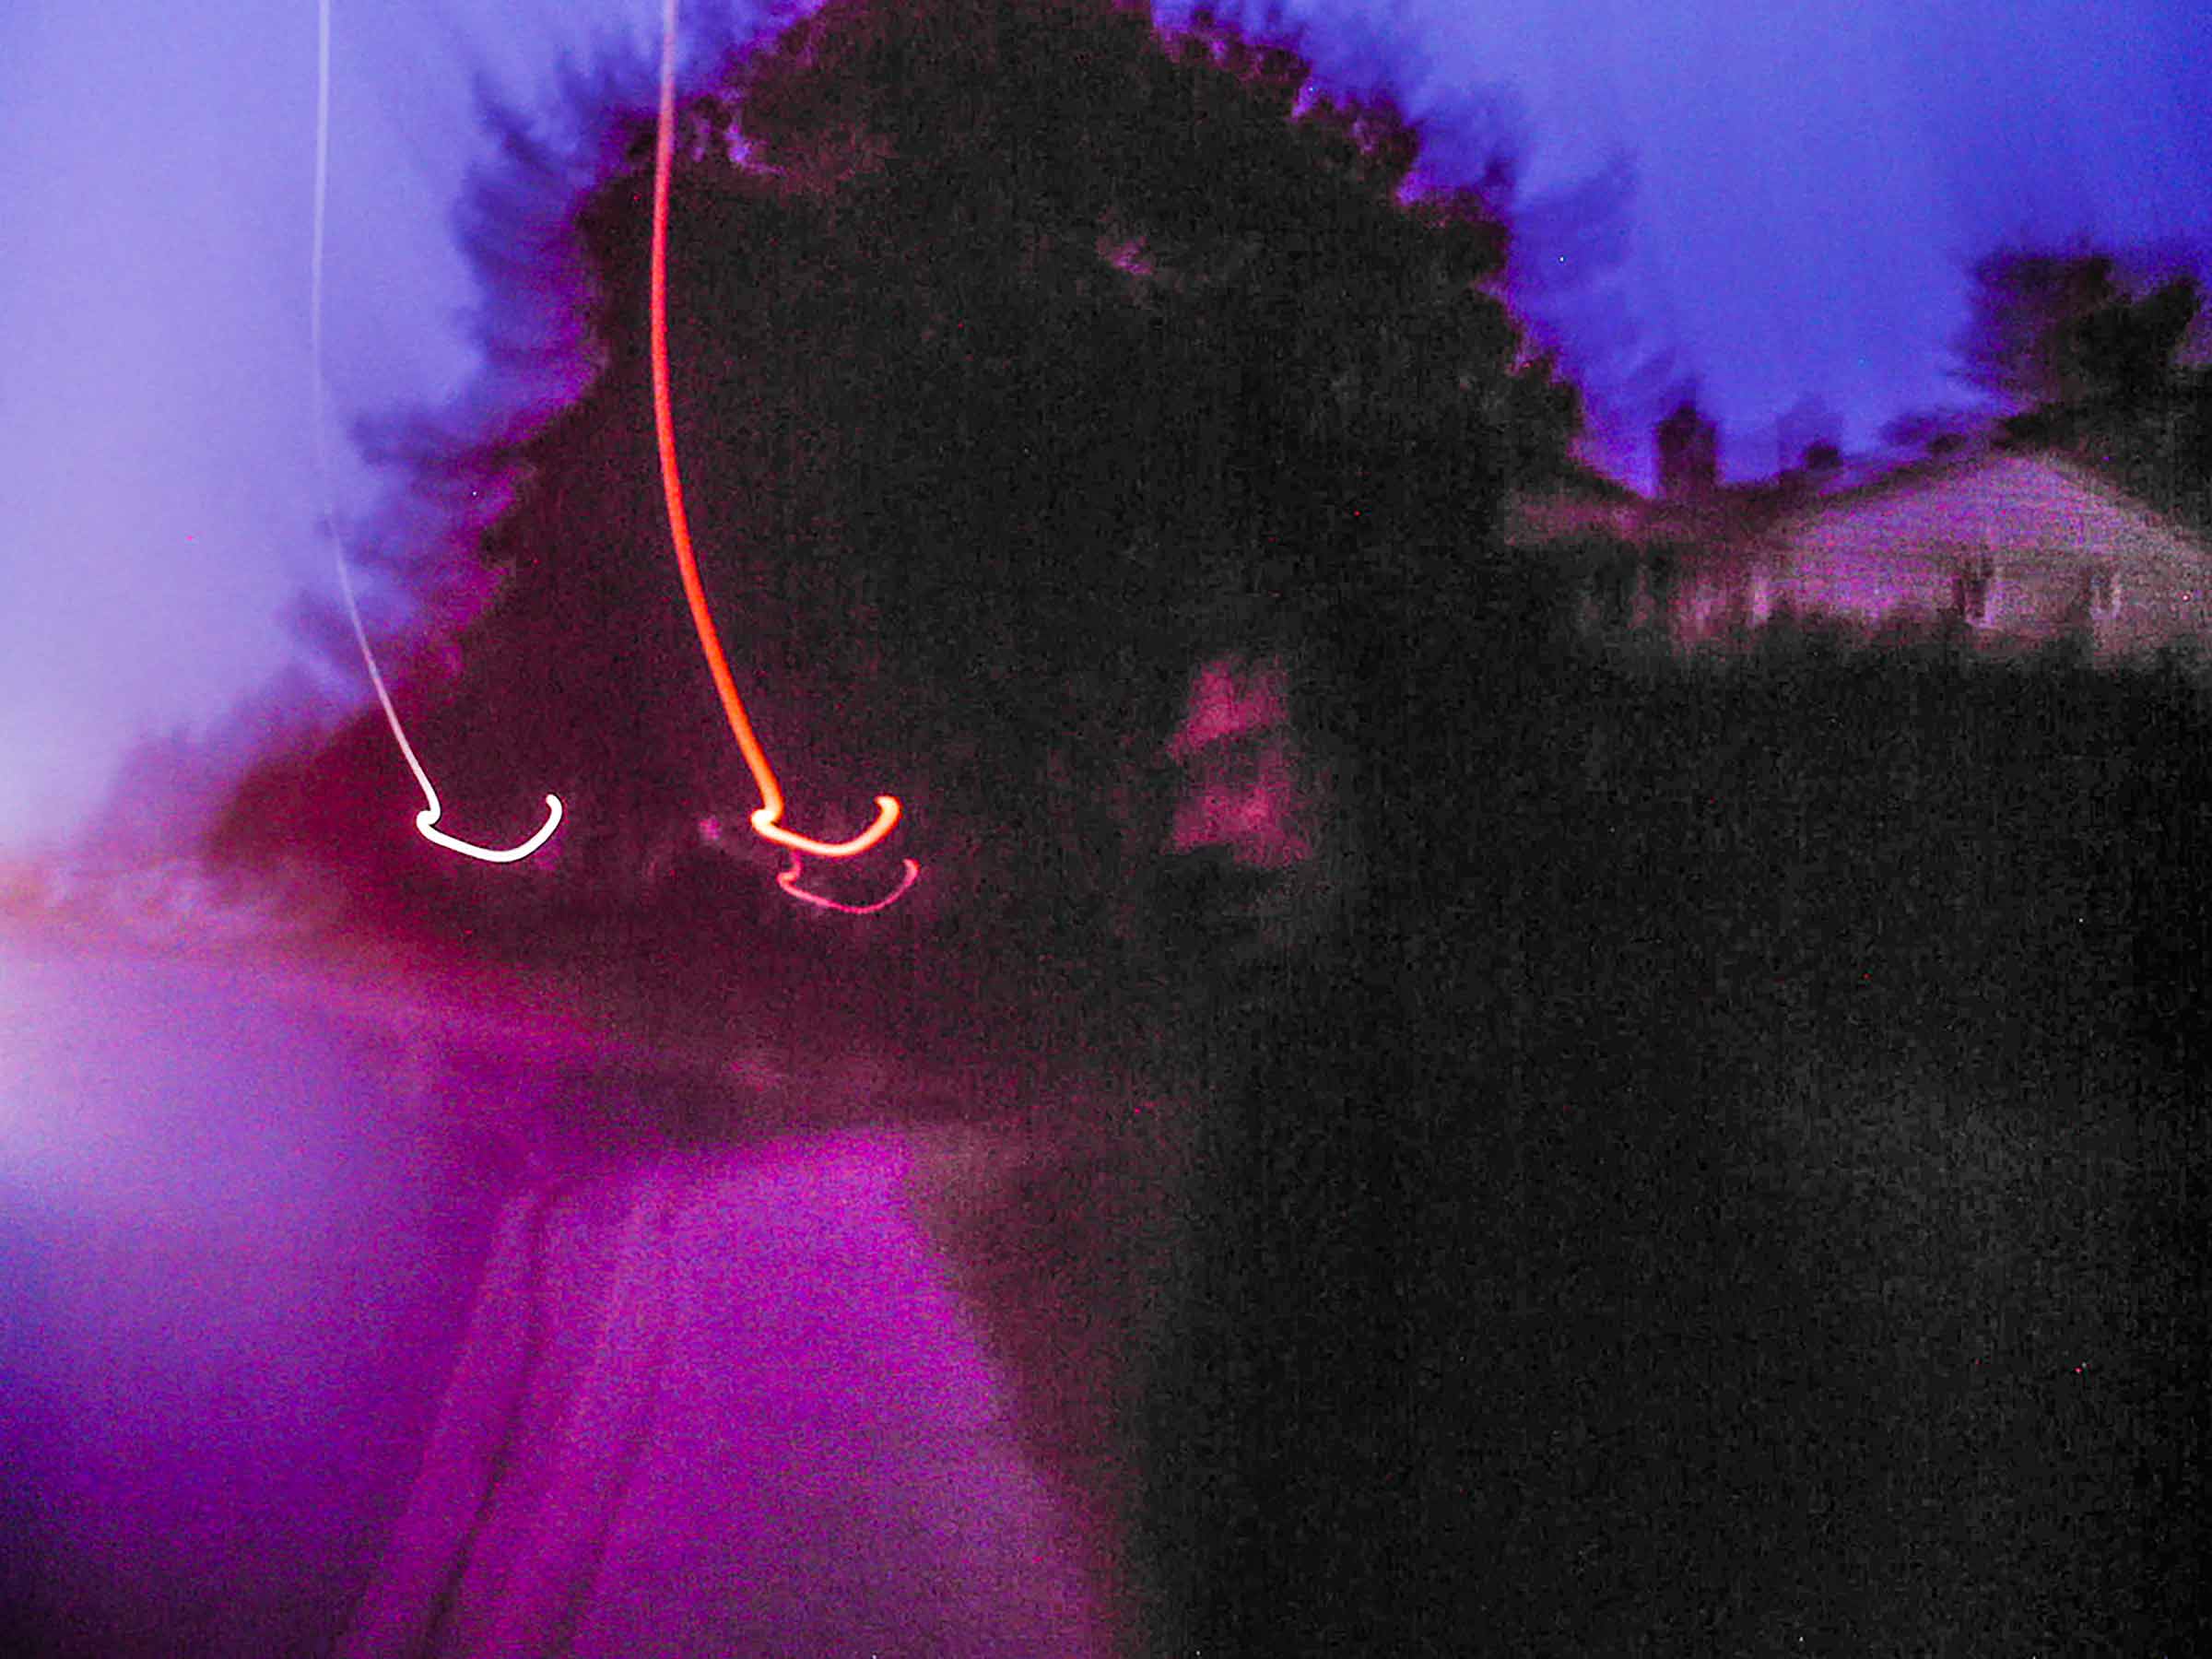 Lo-fi polaroid photograph of person on a sidewalk